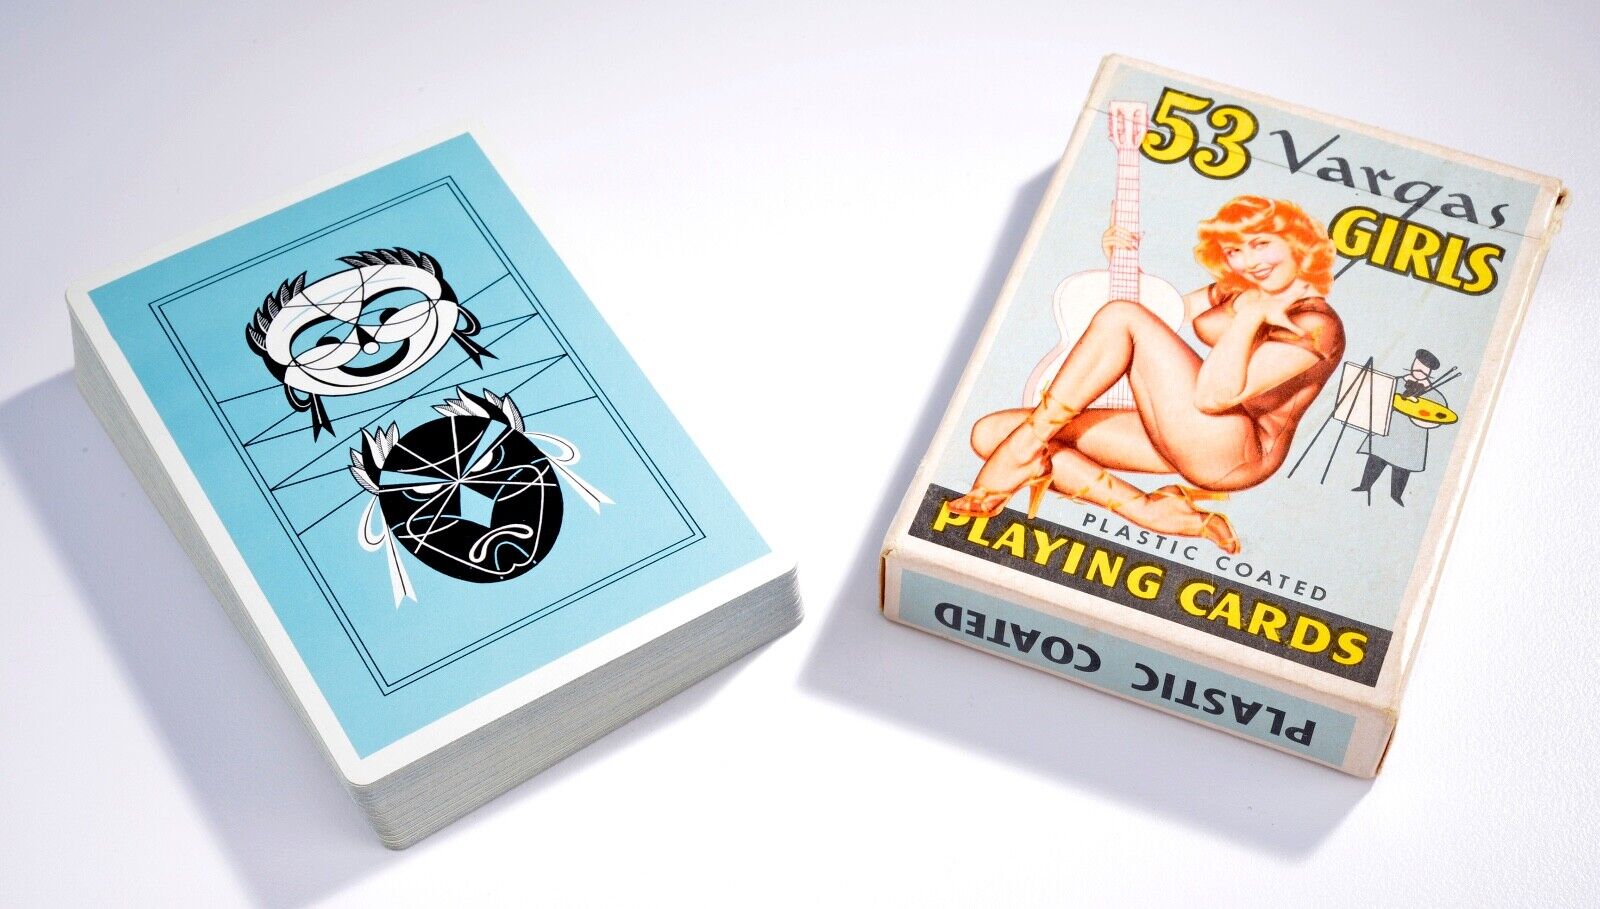 Vintage 1950's Signed Alberto Vargas 53 Vargas Girls Playing Cards - Complete